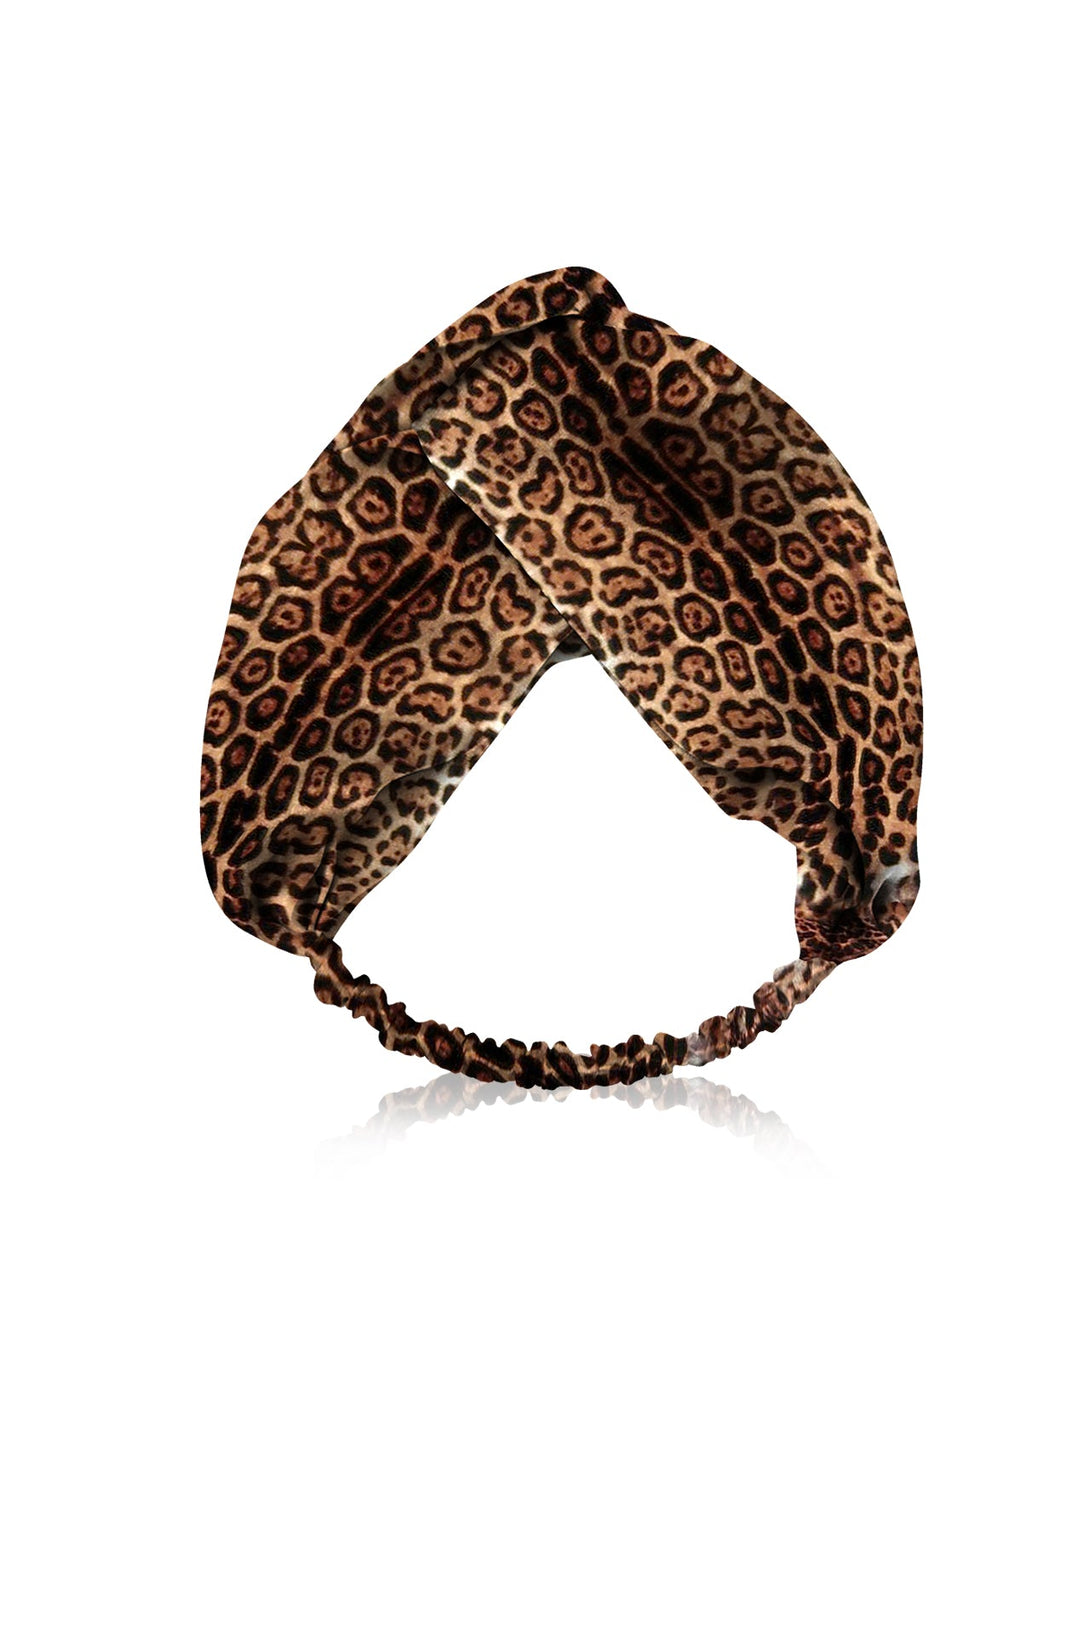 "Shahida Parides" "printed hair bands" "leopard knot headband" "knotted leopard headband"